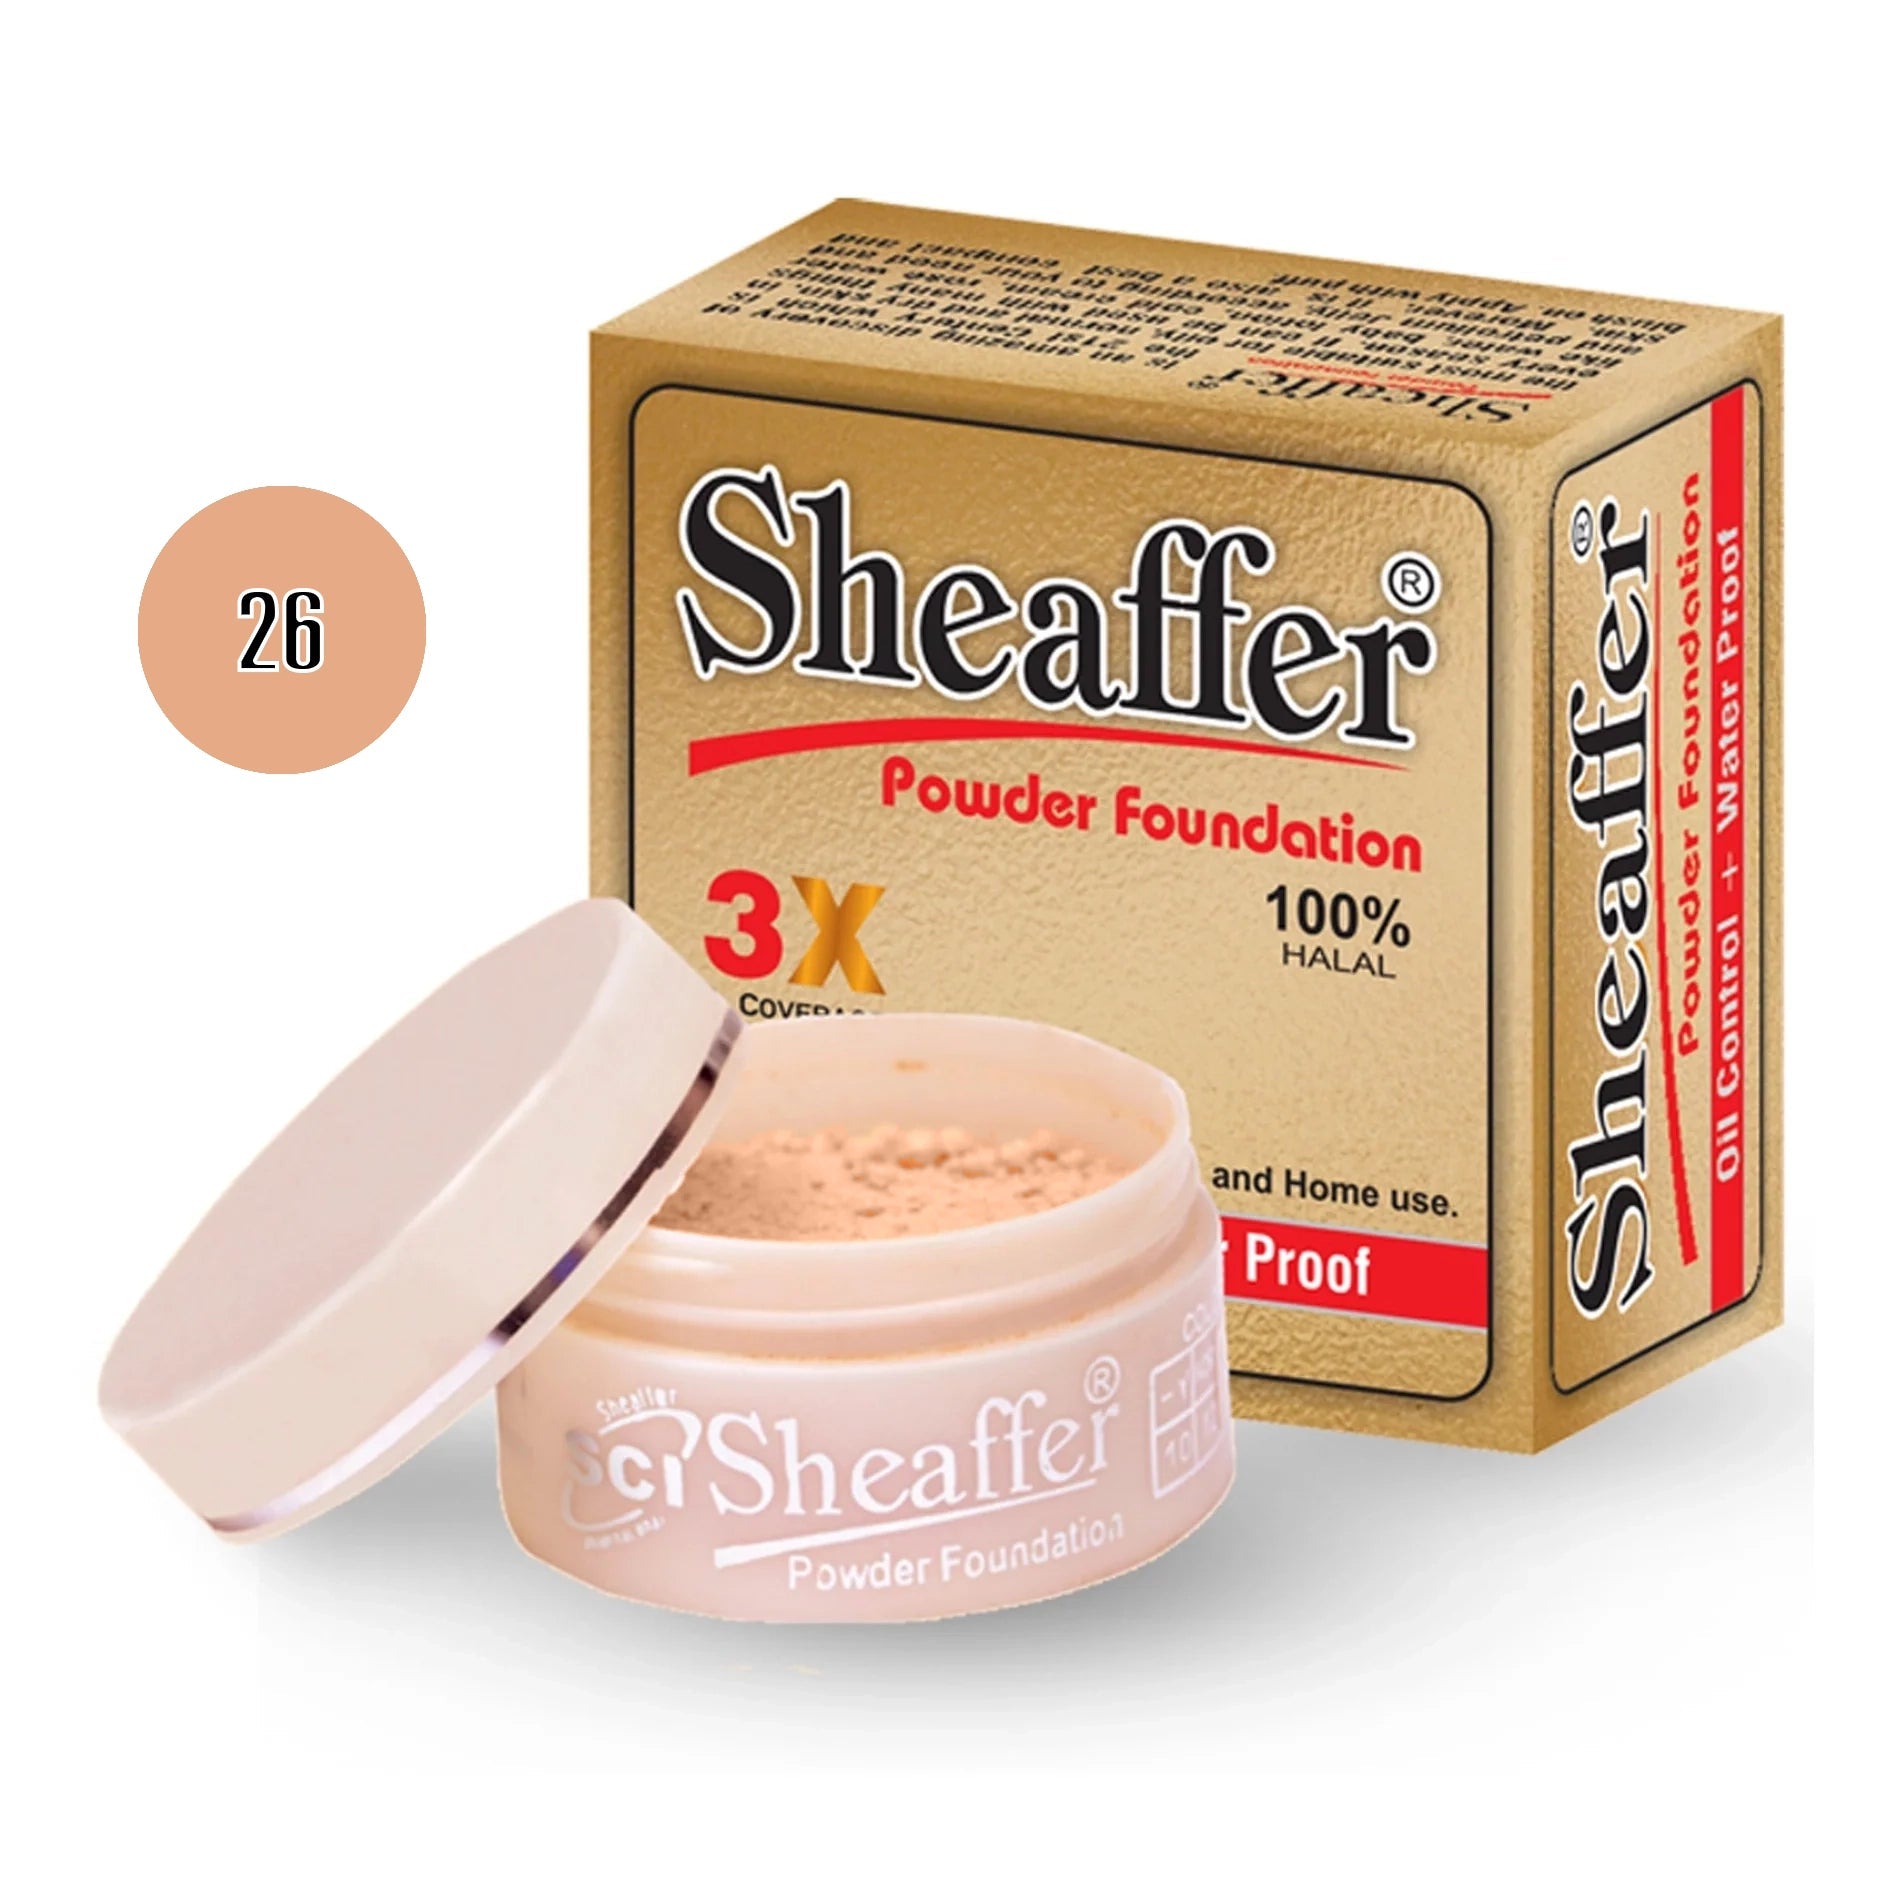 Sheaffer Powder Foundation Base Ivory Shade - Retailershop - Online Shopping Center